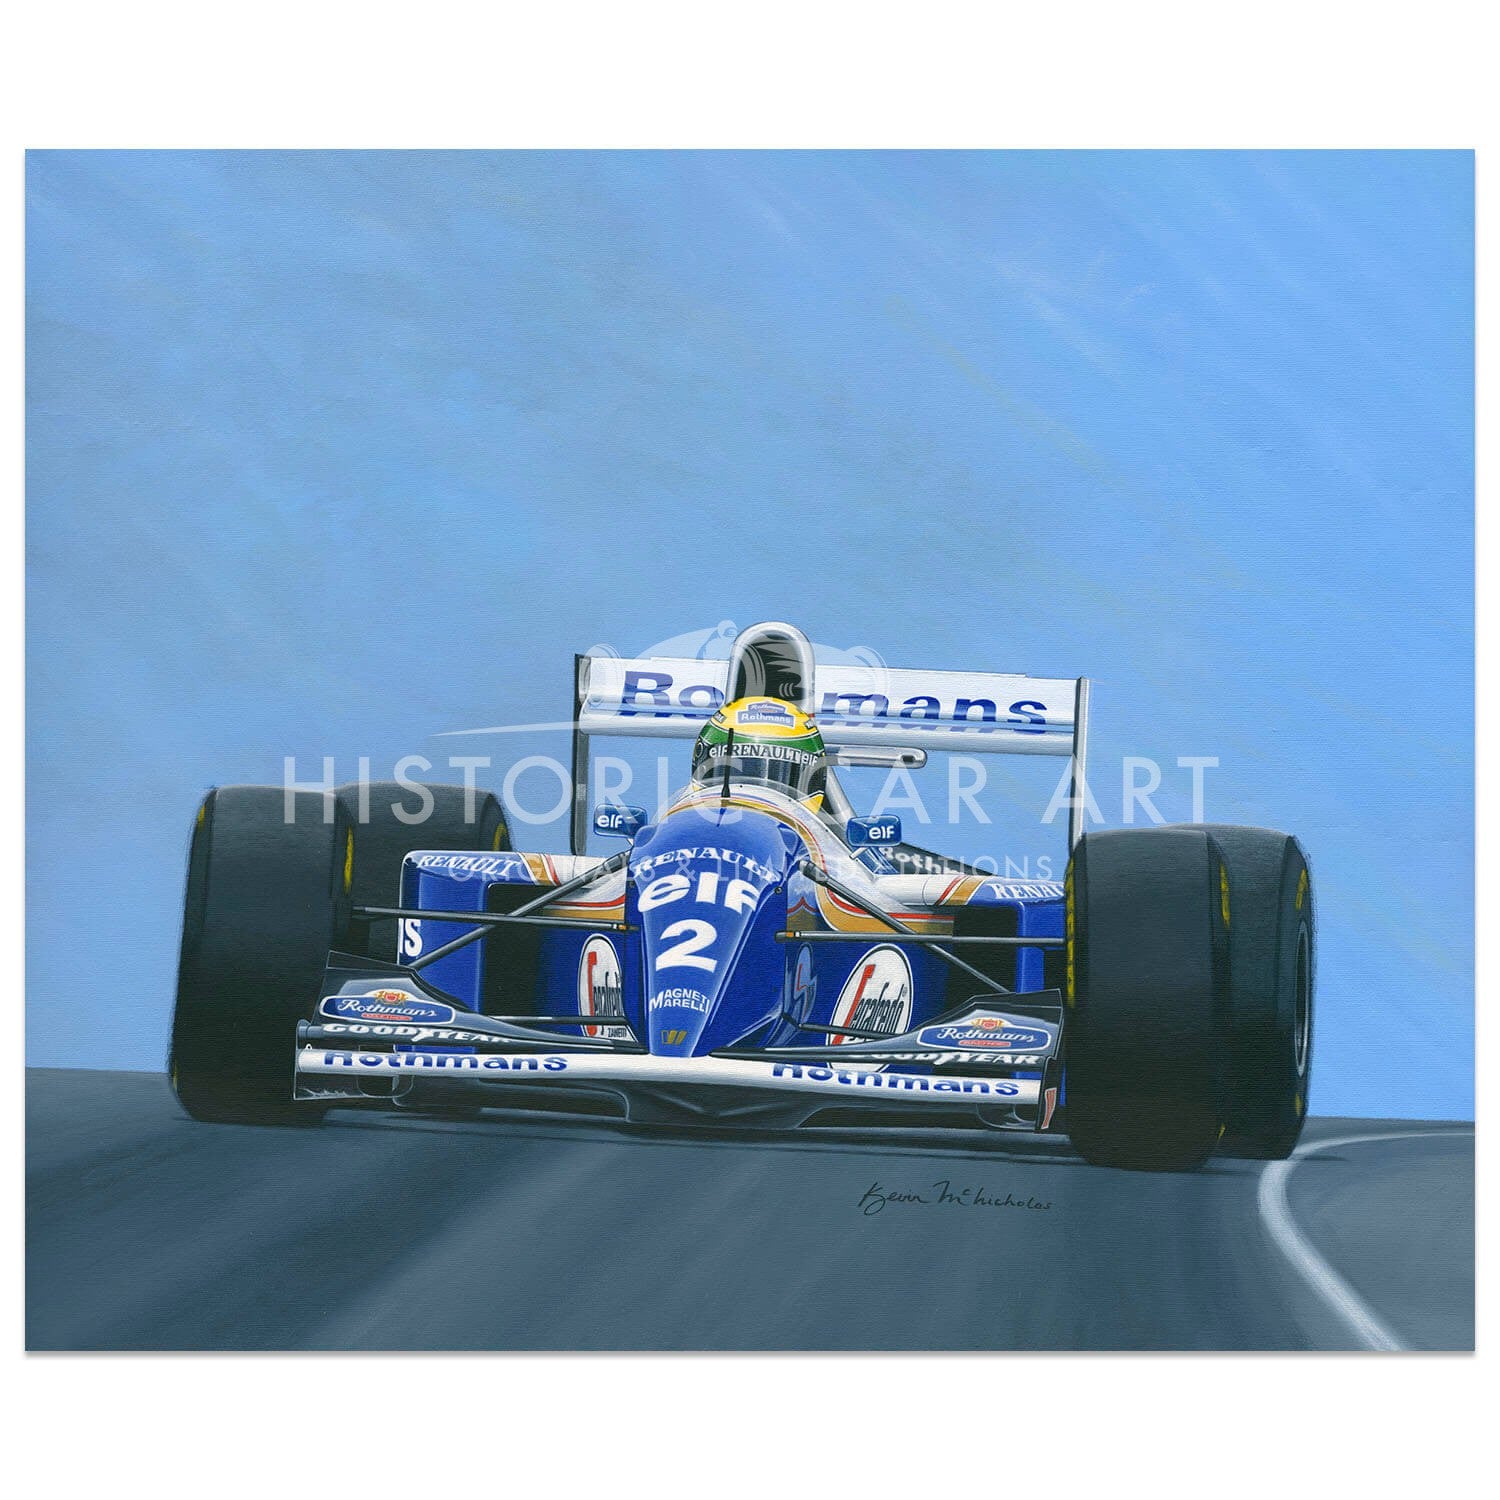 Senna | Ayrton Senna | Williams FW16 | Artwork